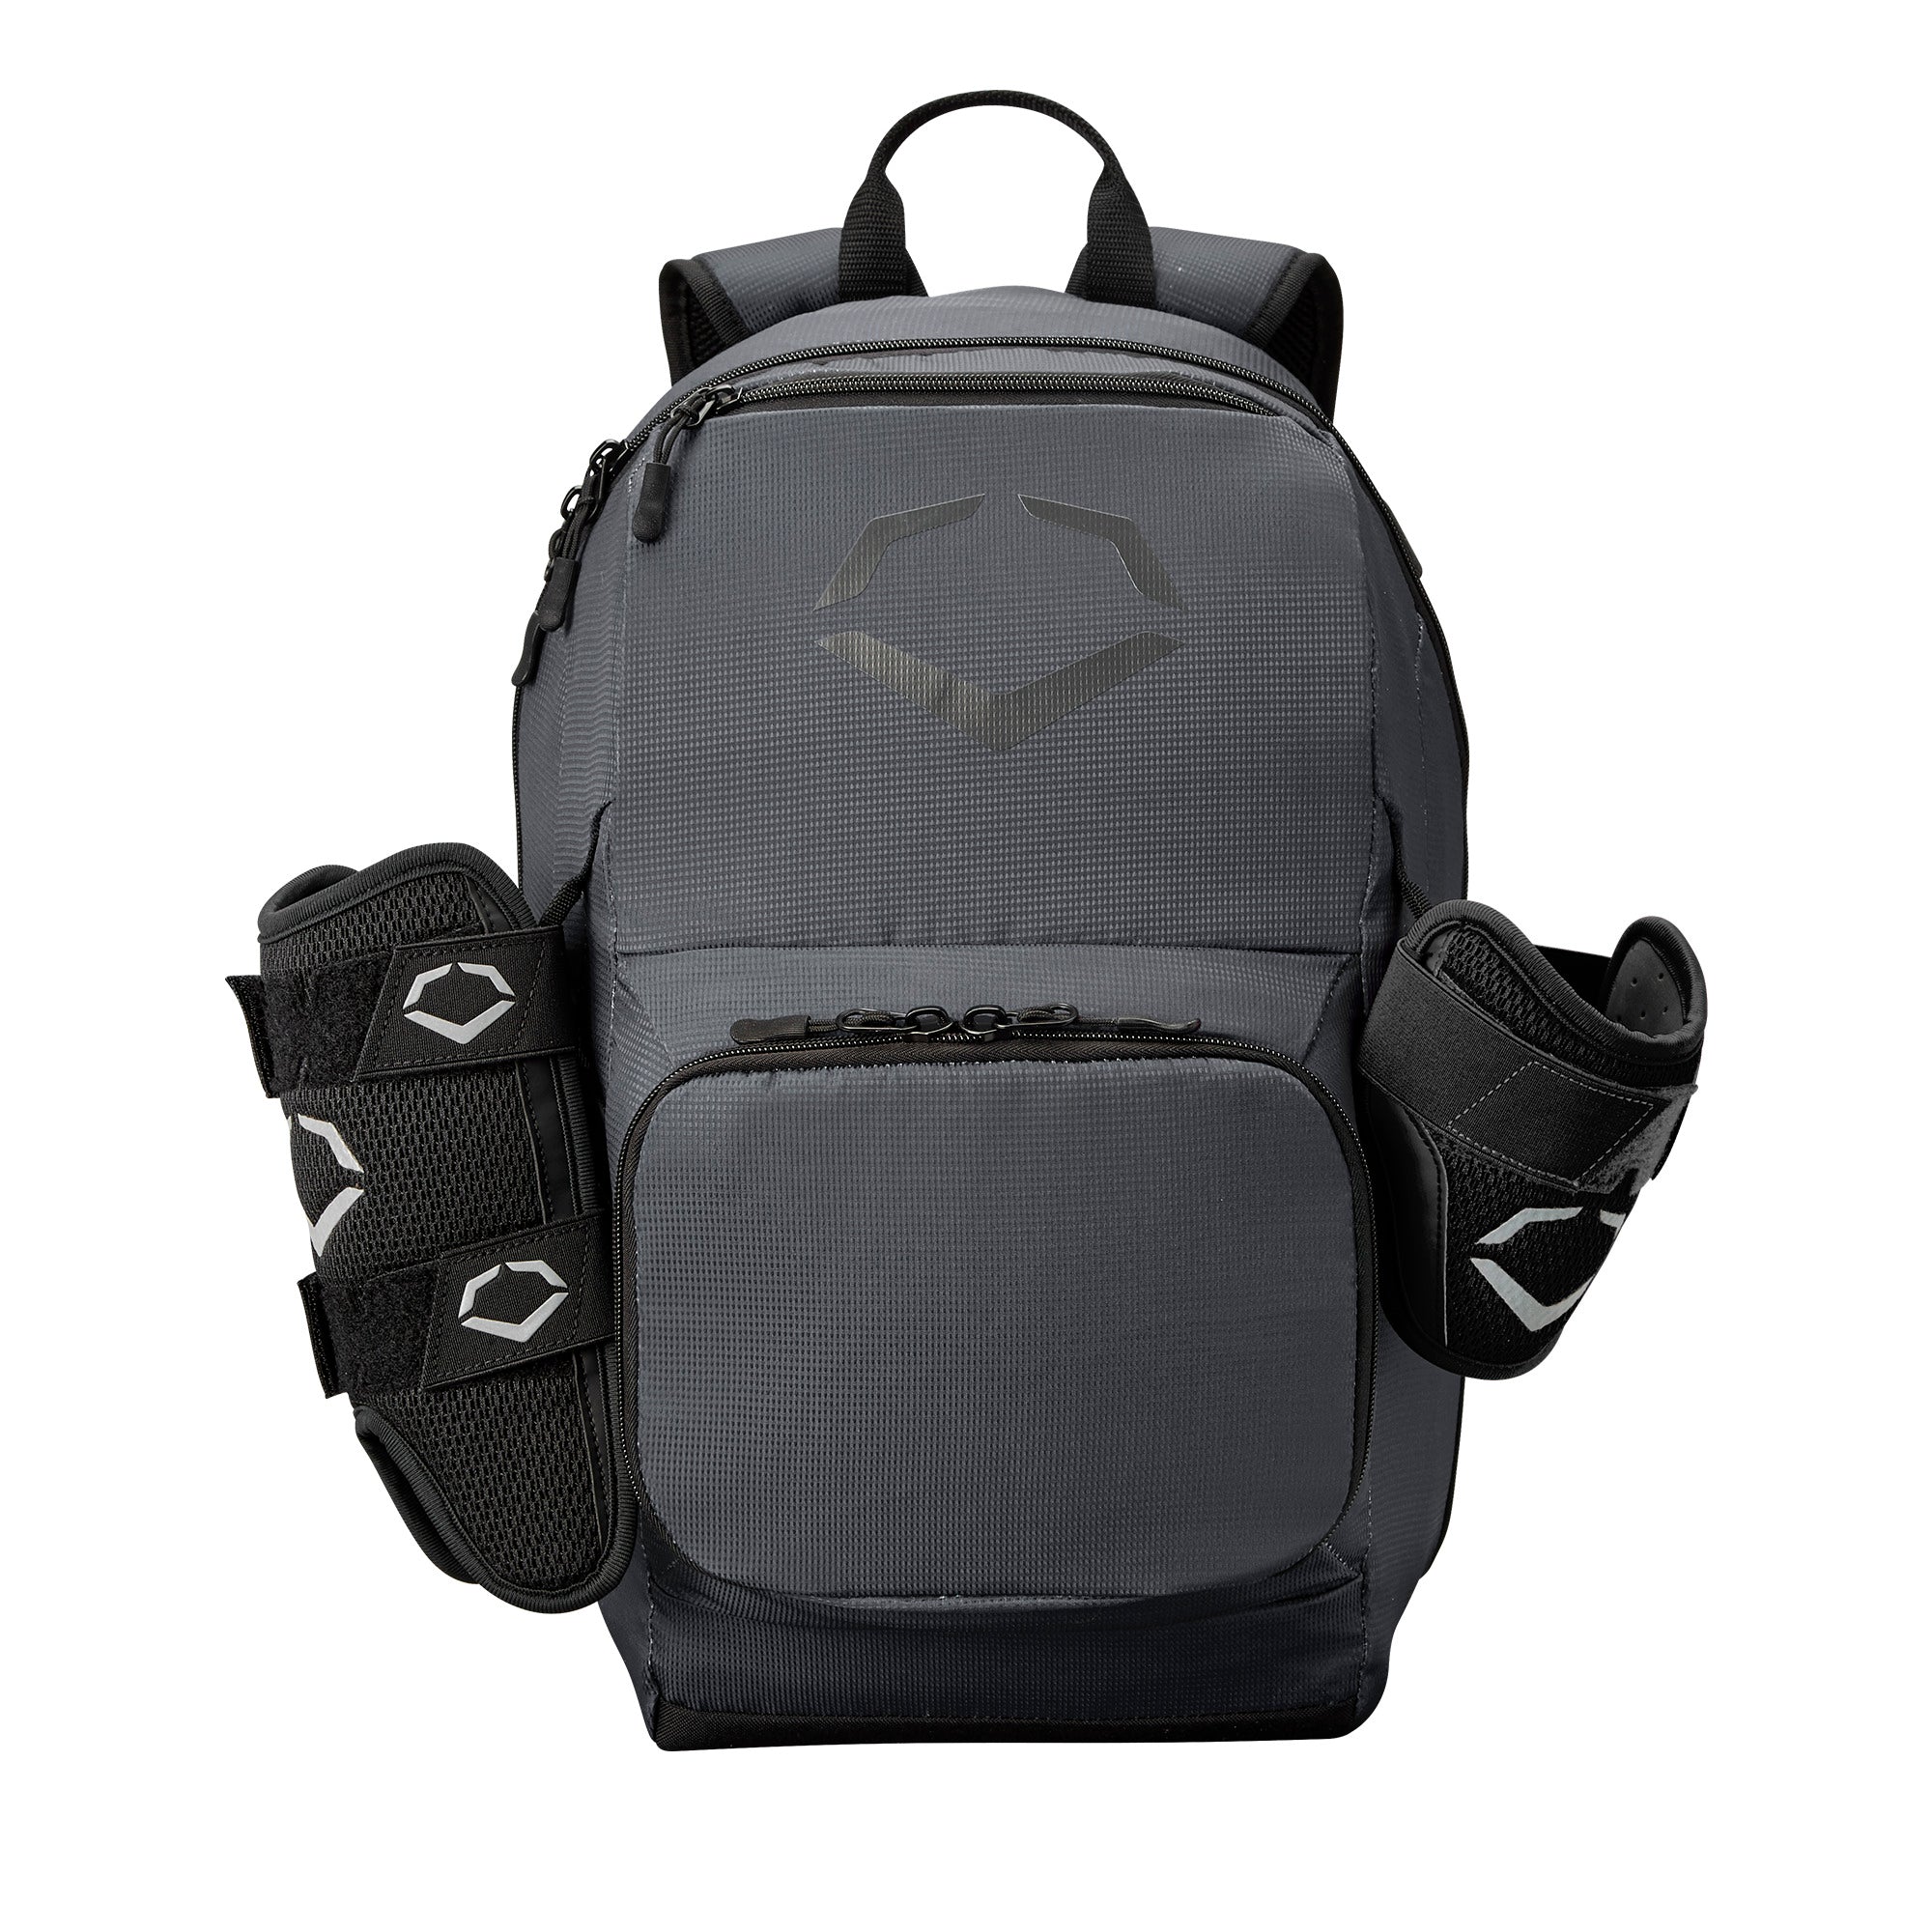 Evoshield SRZ-1 Backpack